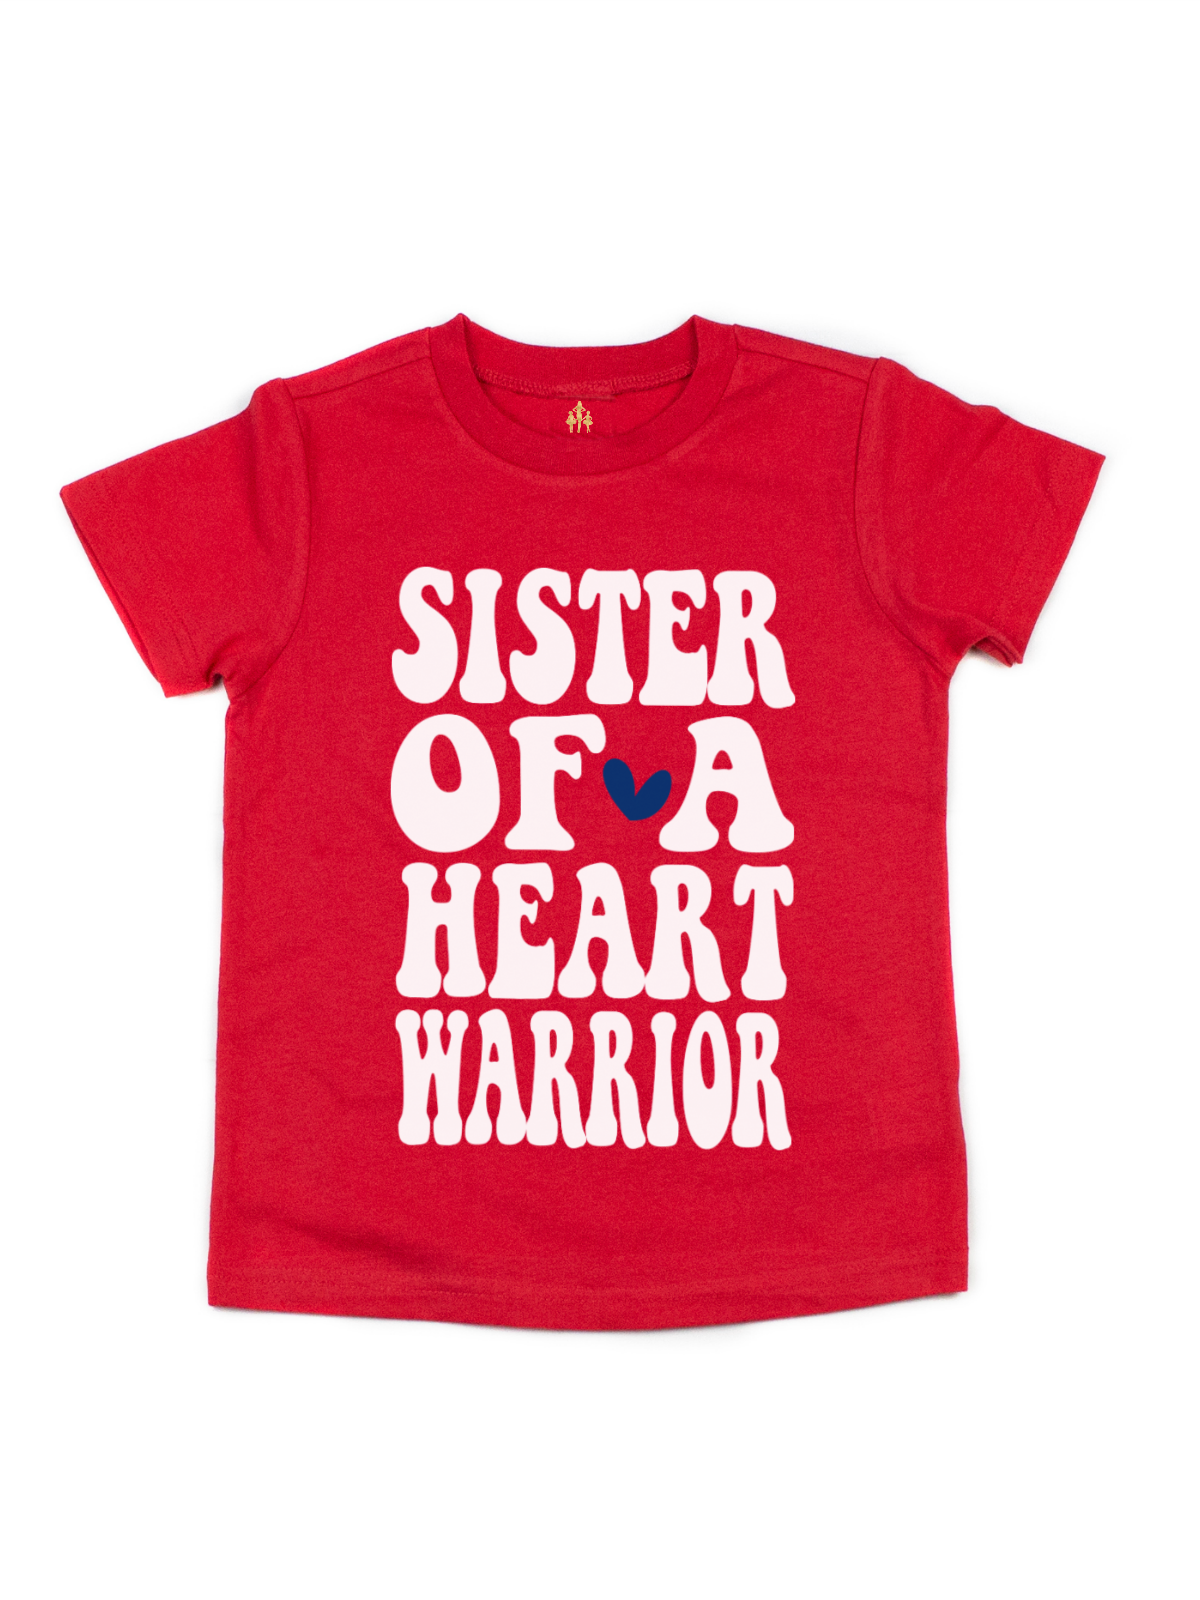 Sister of a Heart Warrior Kids CHD Awareness Shirt in Red